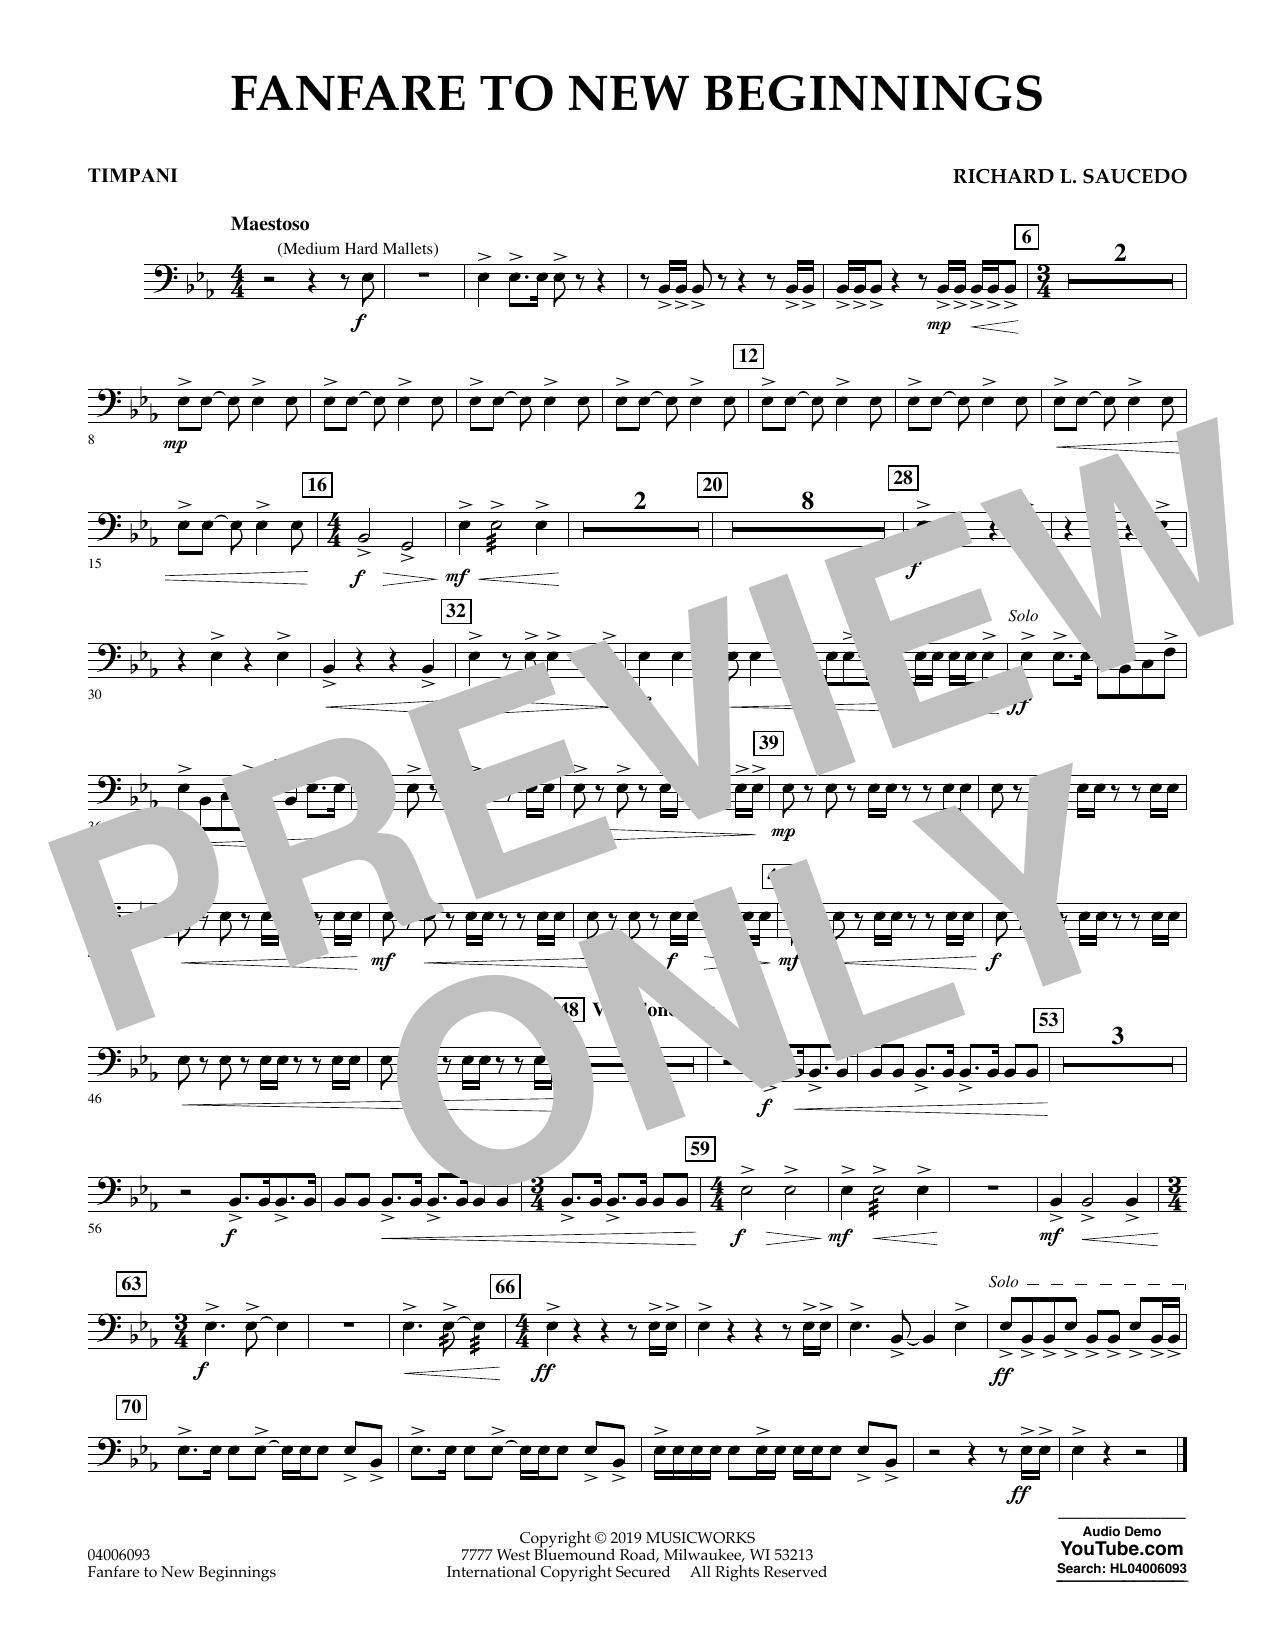 Download Richard L. Saucedo Fanfare for New Beginnings - Timpani Sheet Music